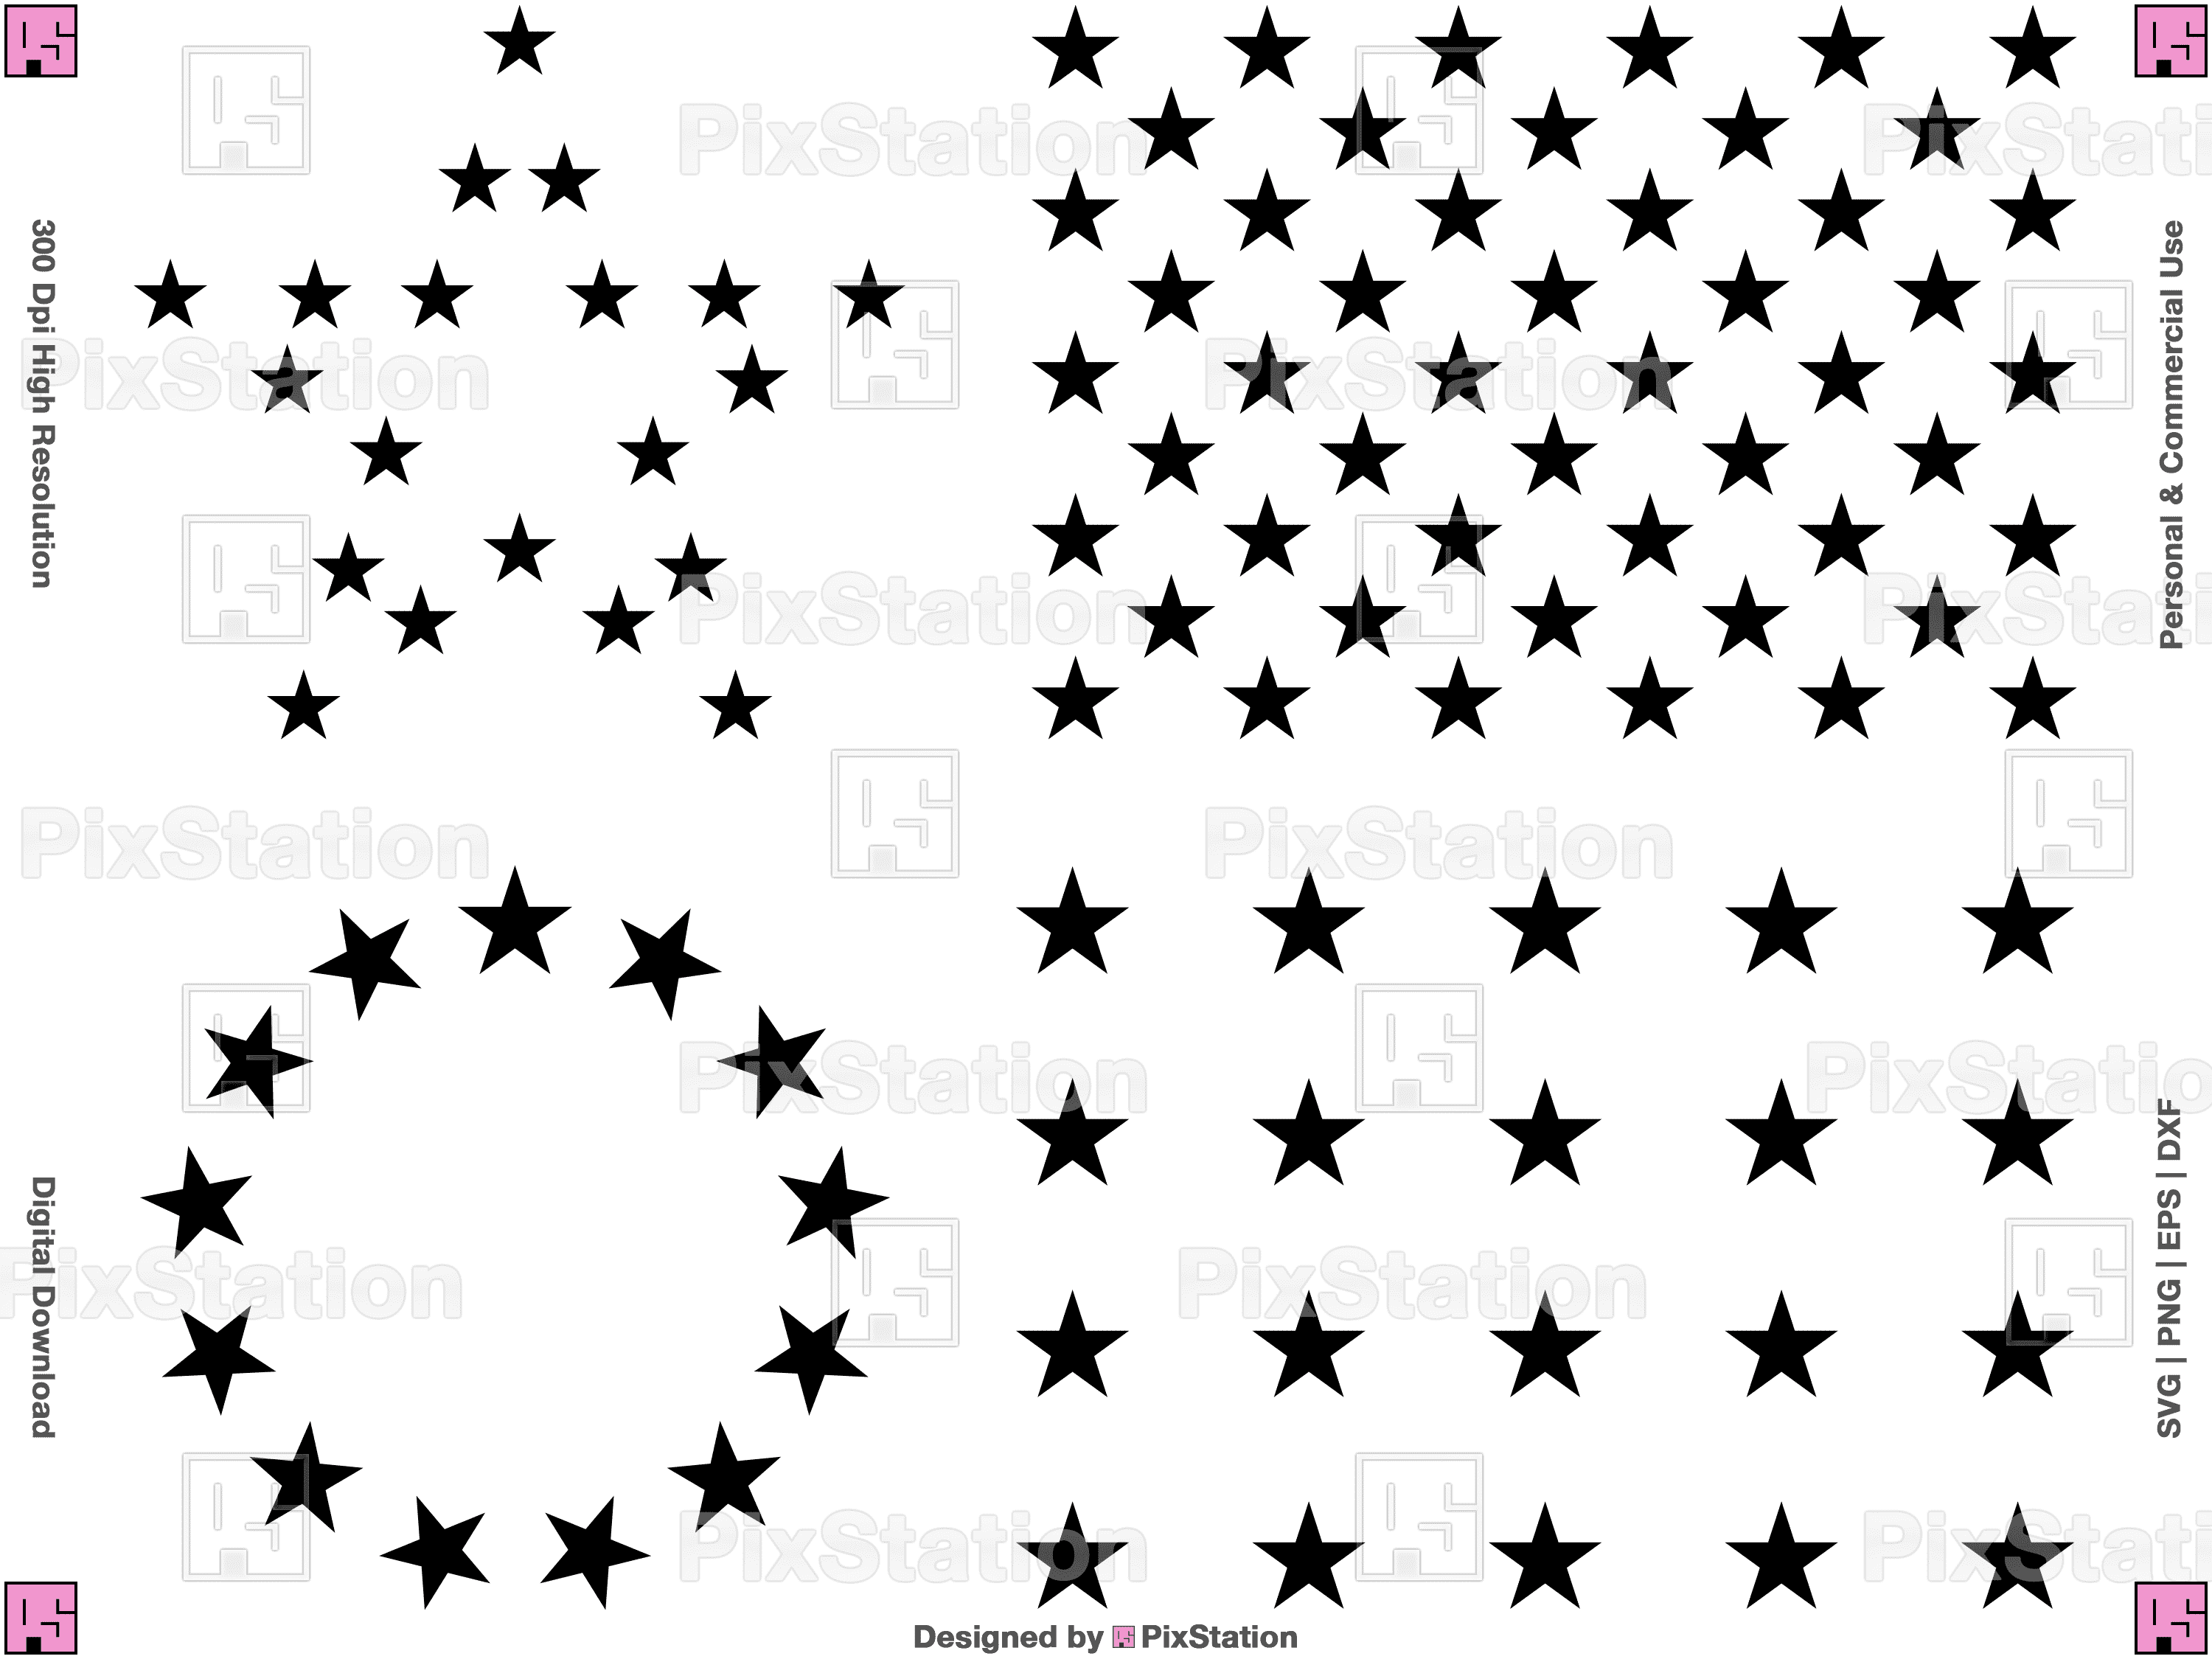 50 Stars American Flag